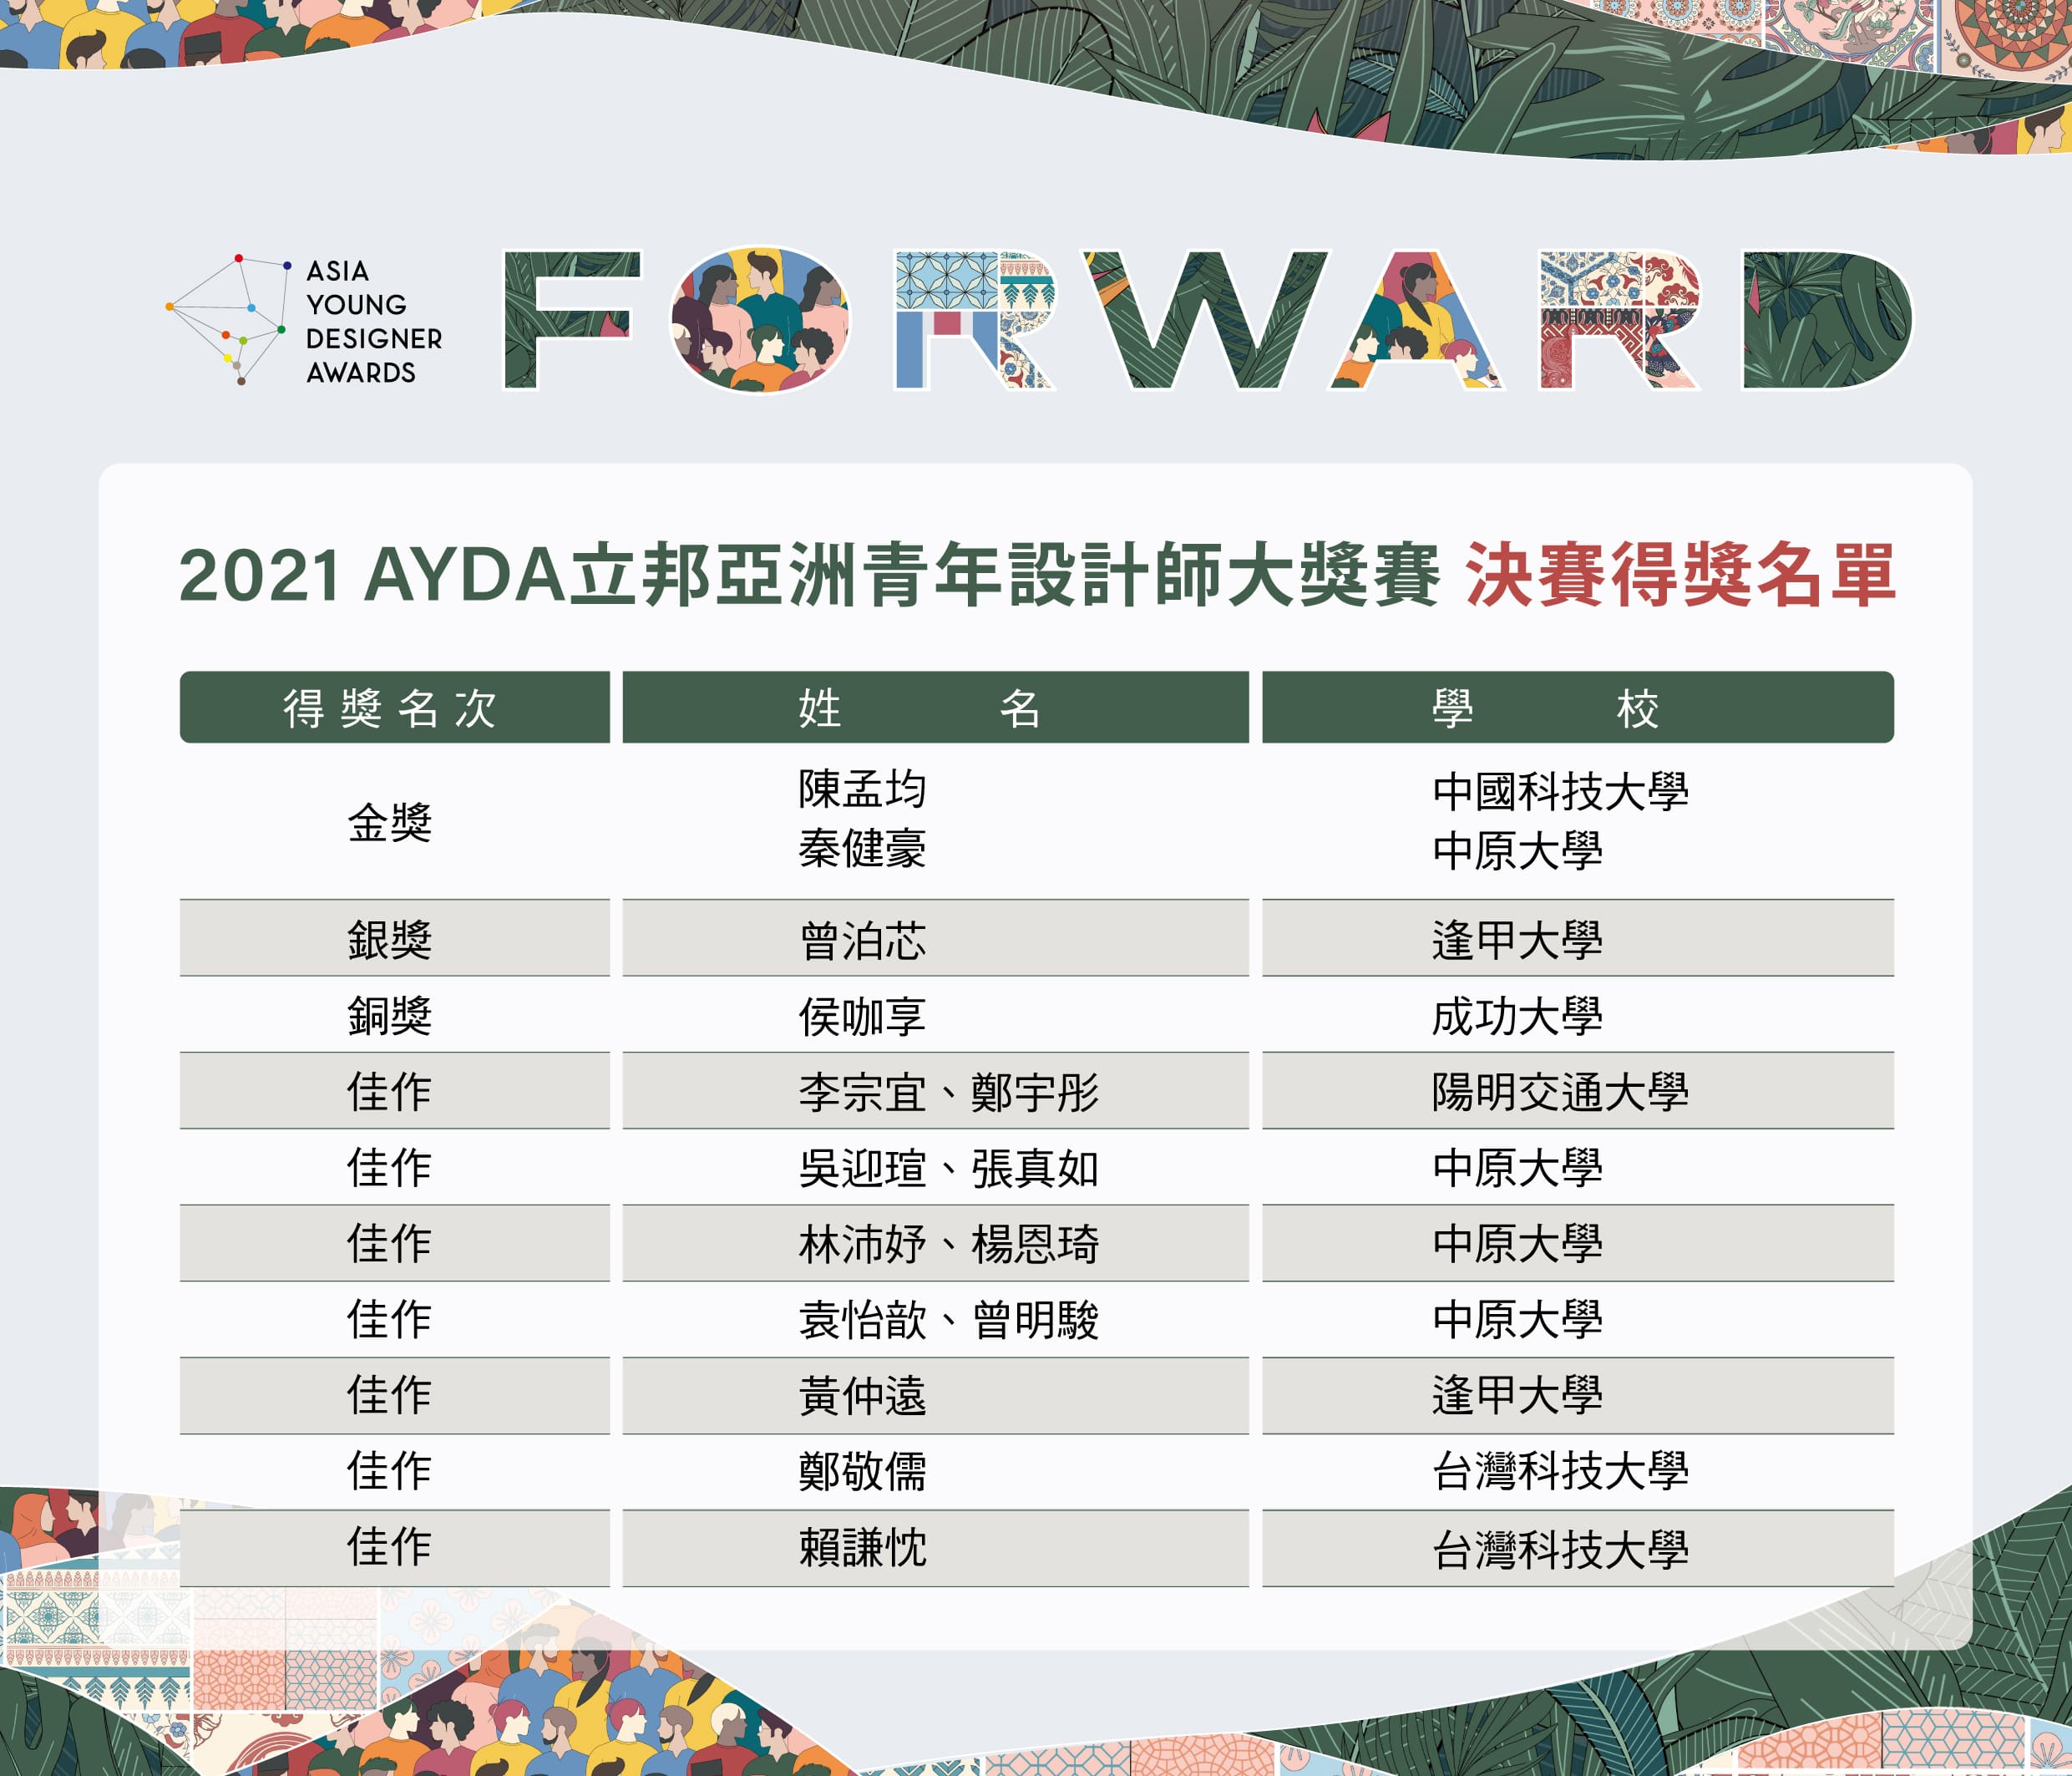 2021 AYDA Awards 台灣決選結果公告